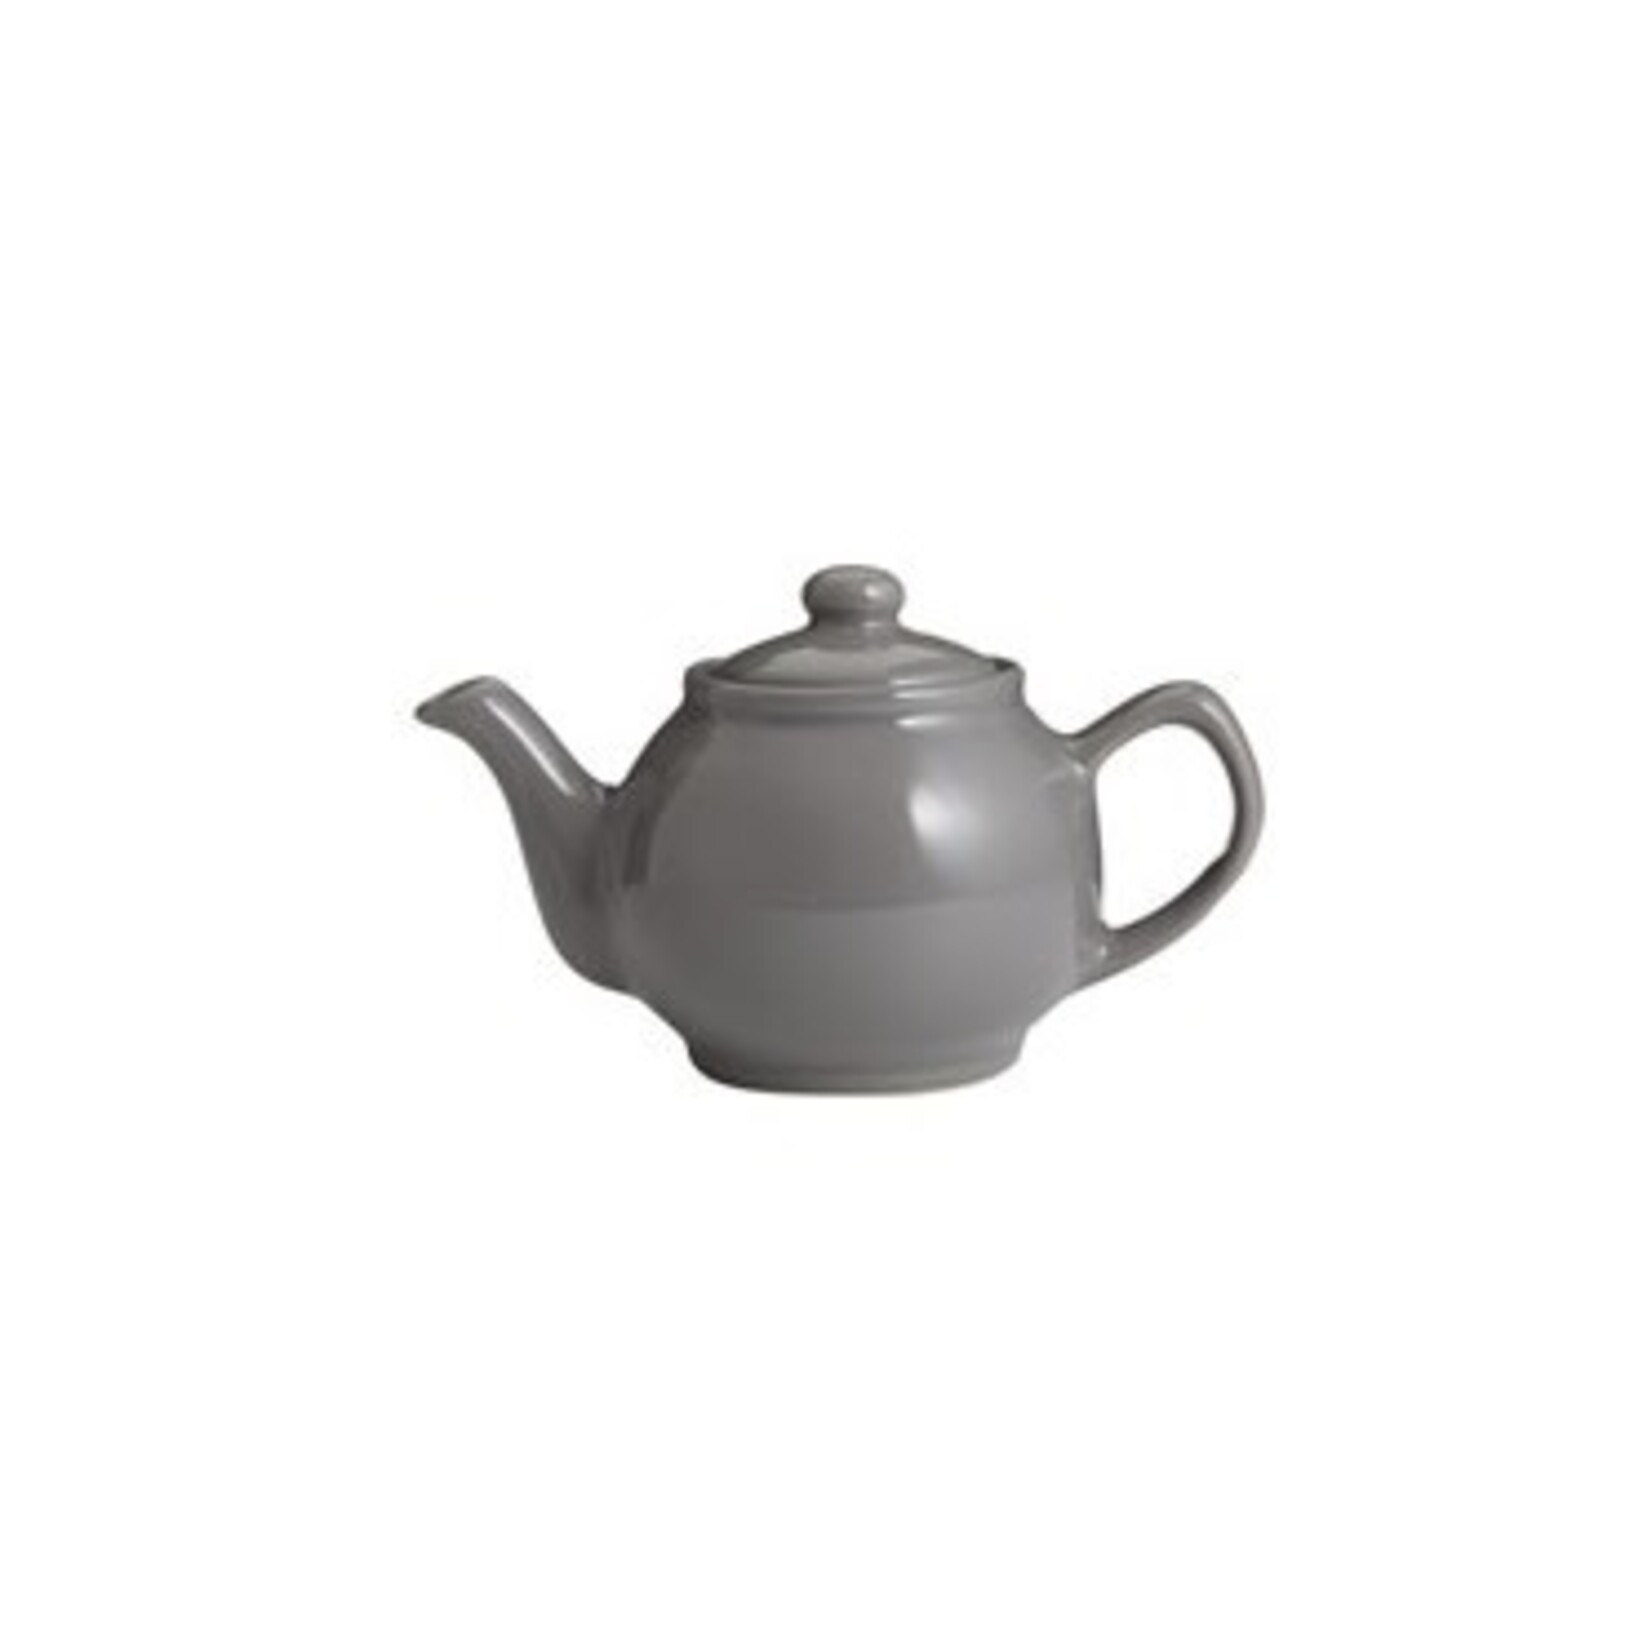 PRICE & KENSINGTON PRICE & KENSINGTON Classic Teapot 2 Cup Charcoal